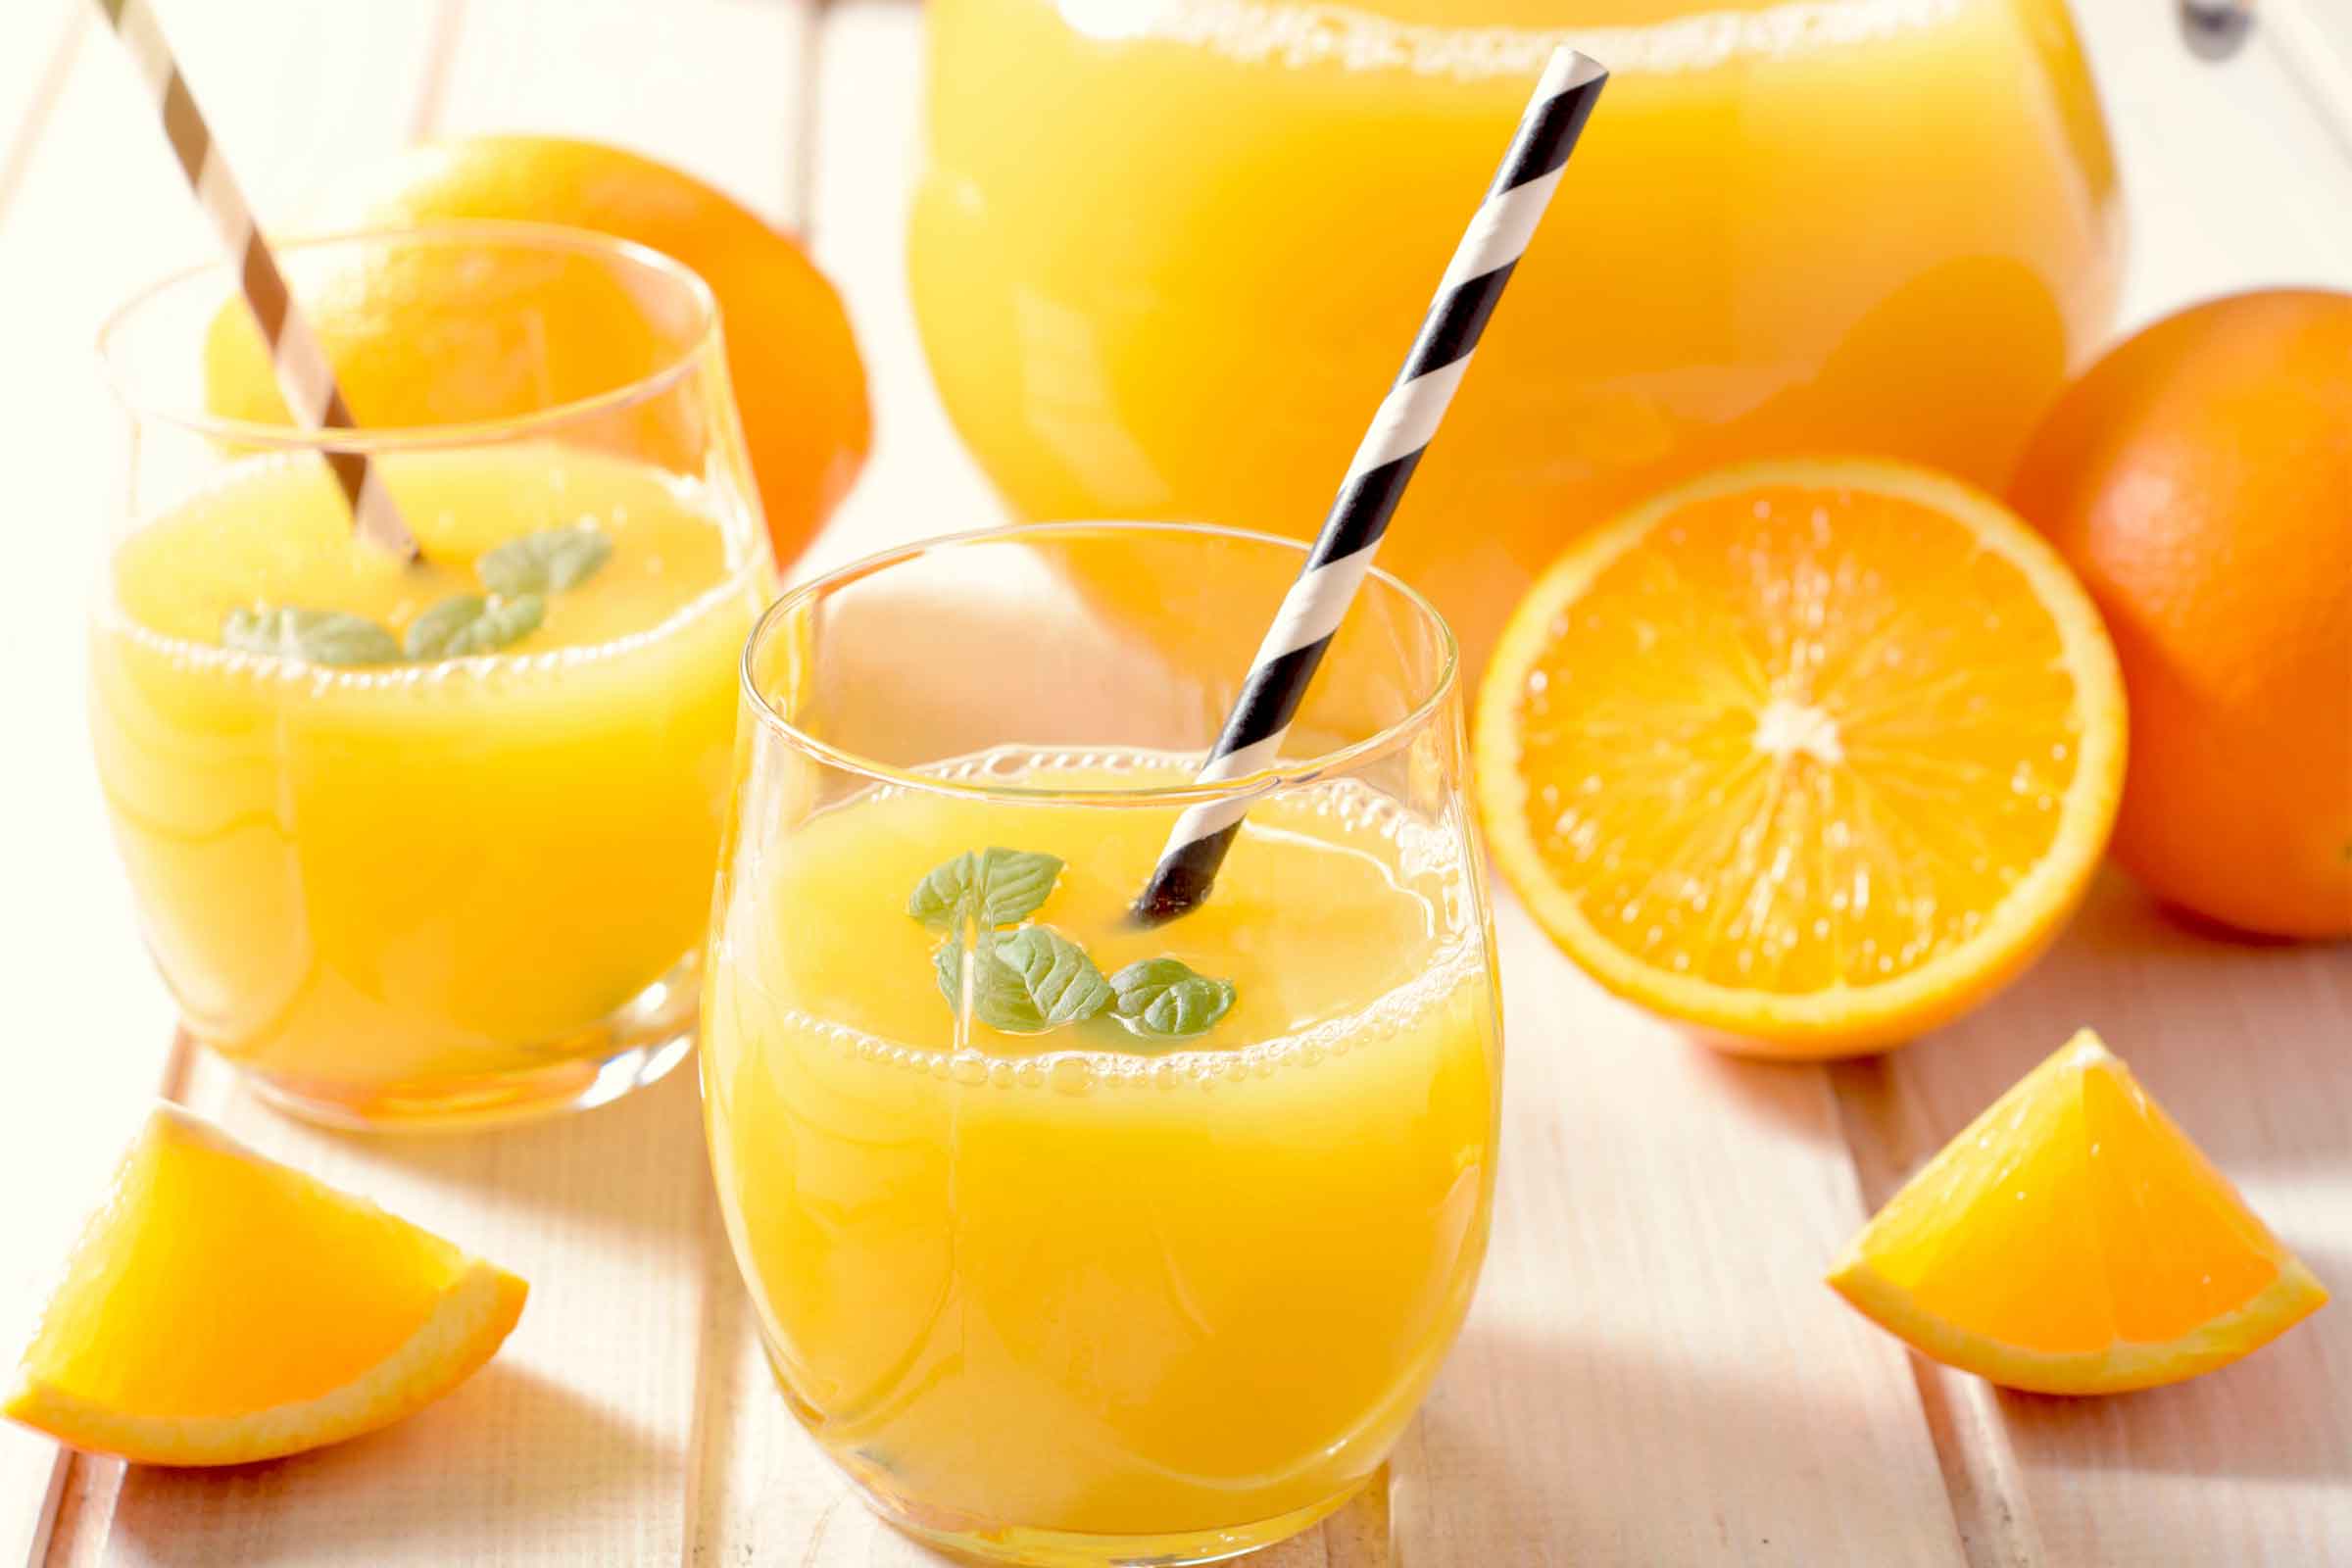 Healthy Juice: Fruit Juices With Health Benefits | Reader's Digest